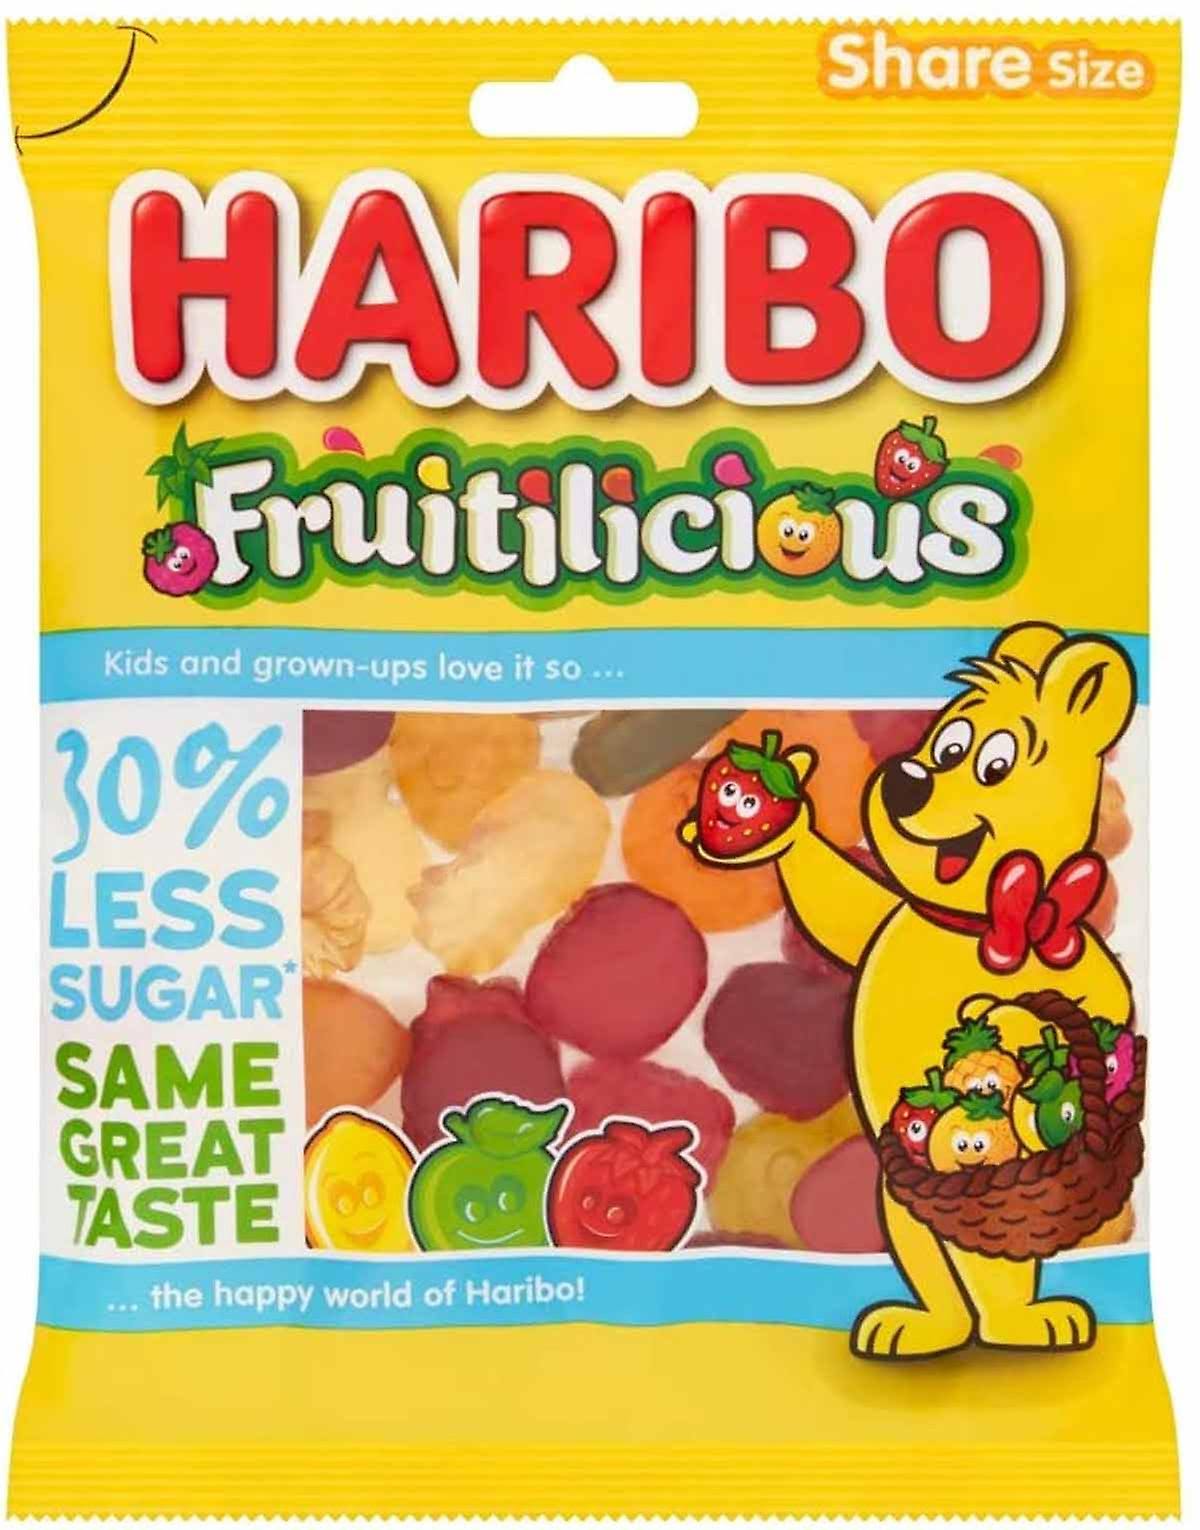 Haribo Fruitilicious Delivered to Australia